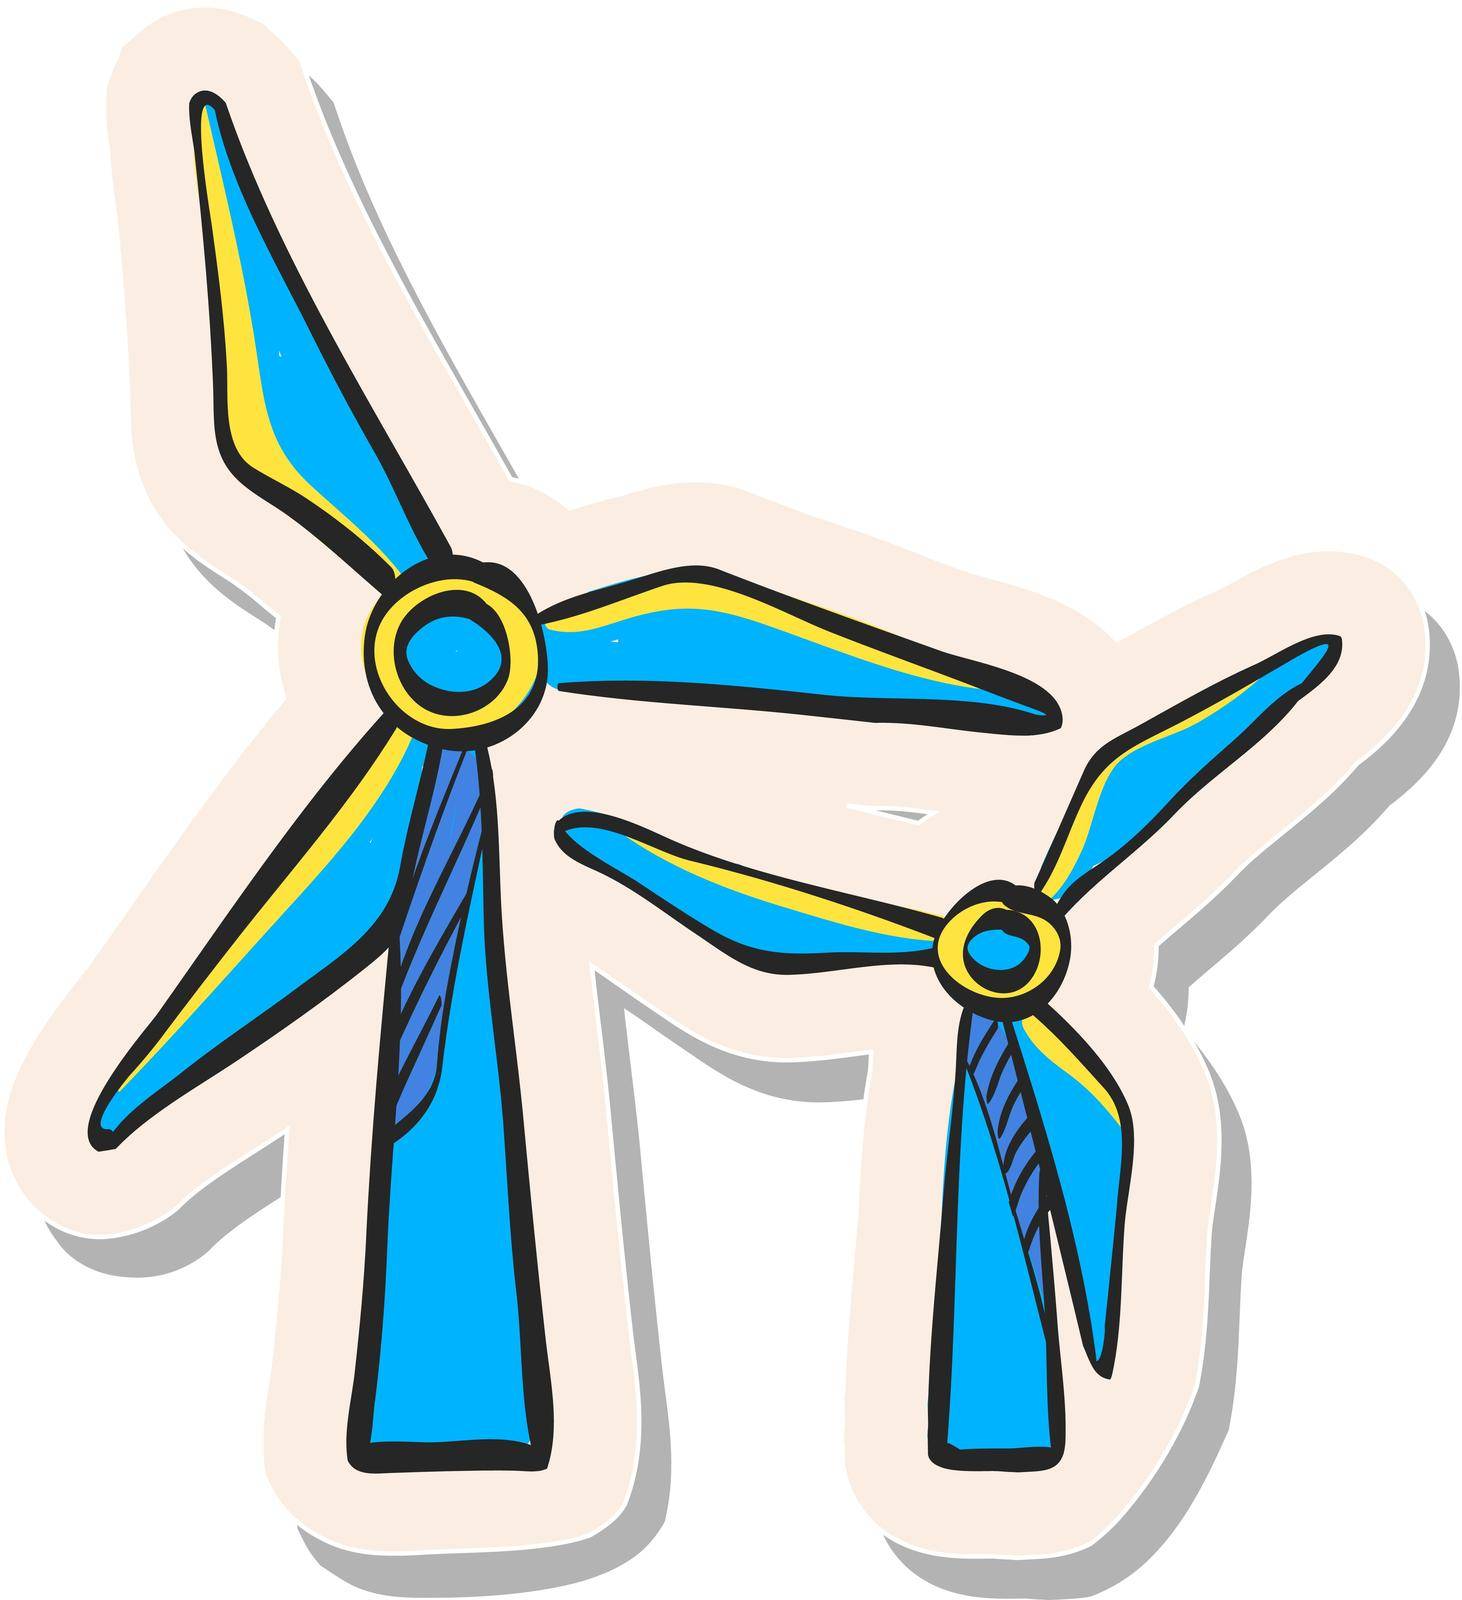 Hand drawn Wind turbine icon in sticker style vector illustration